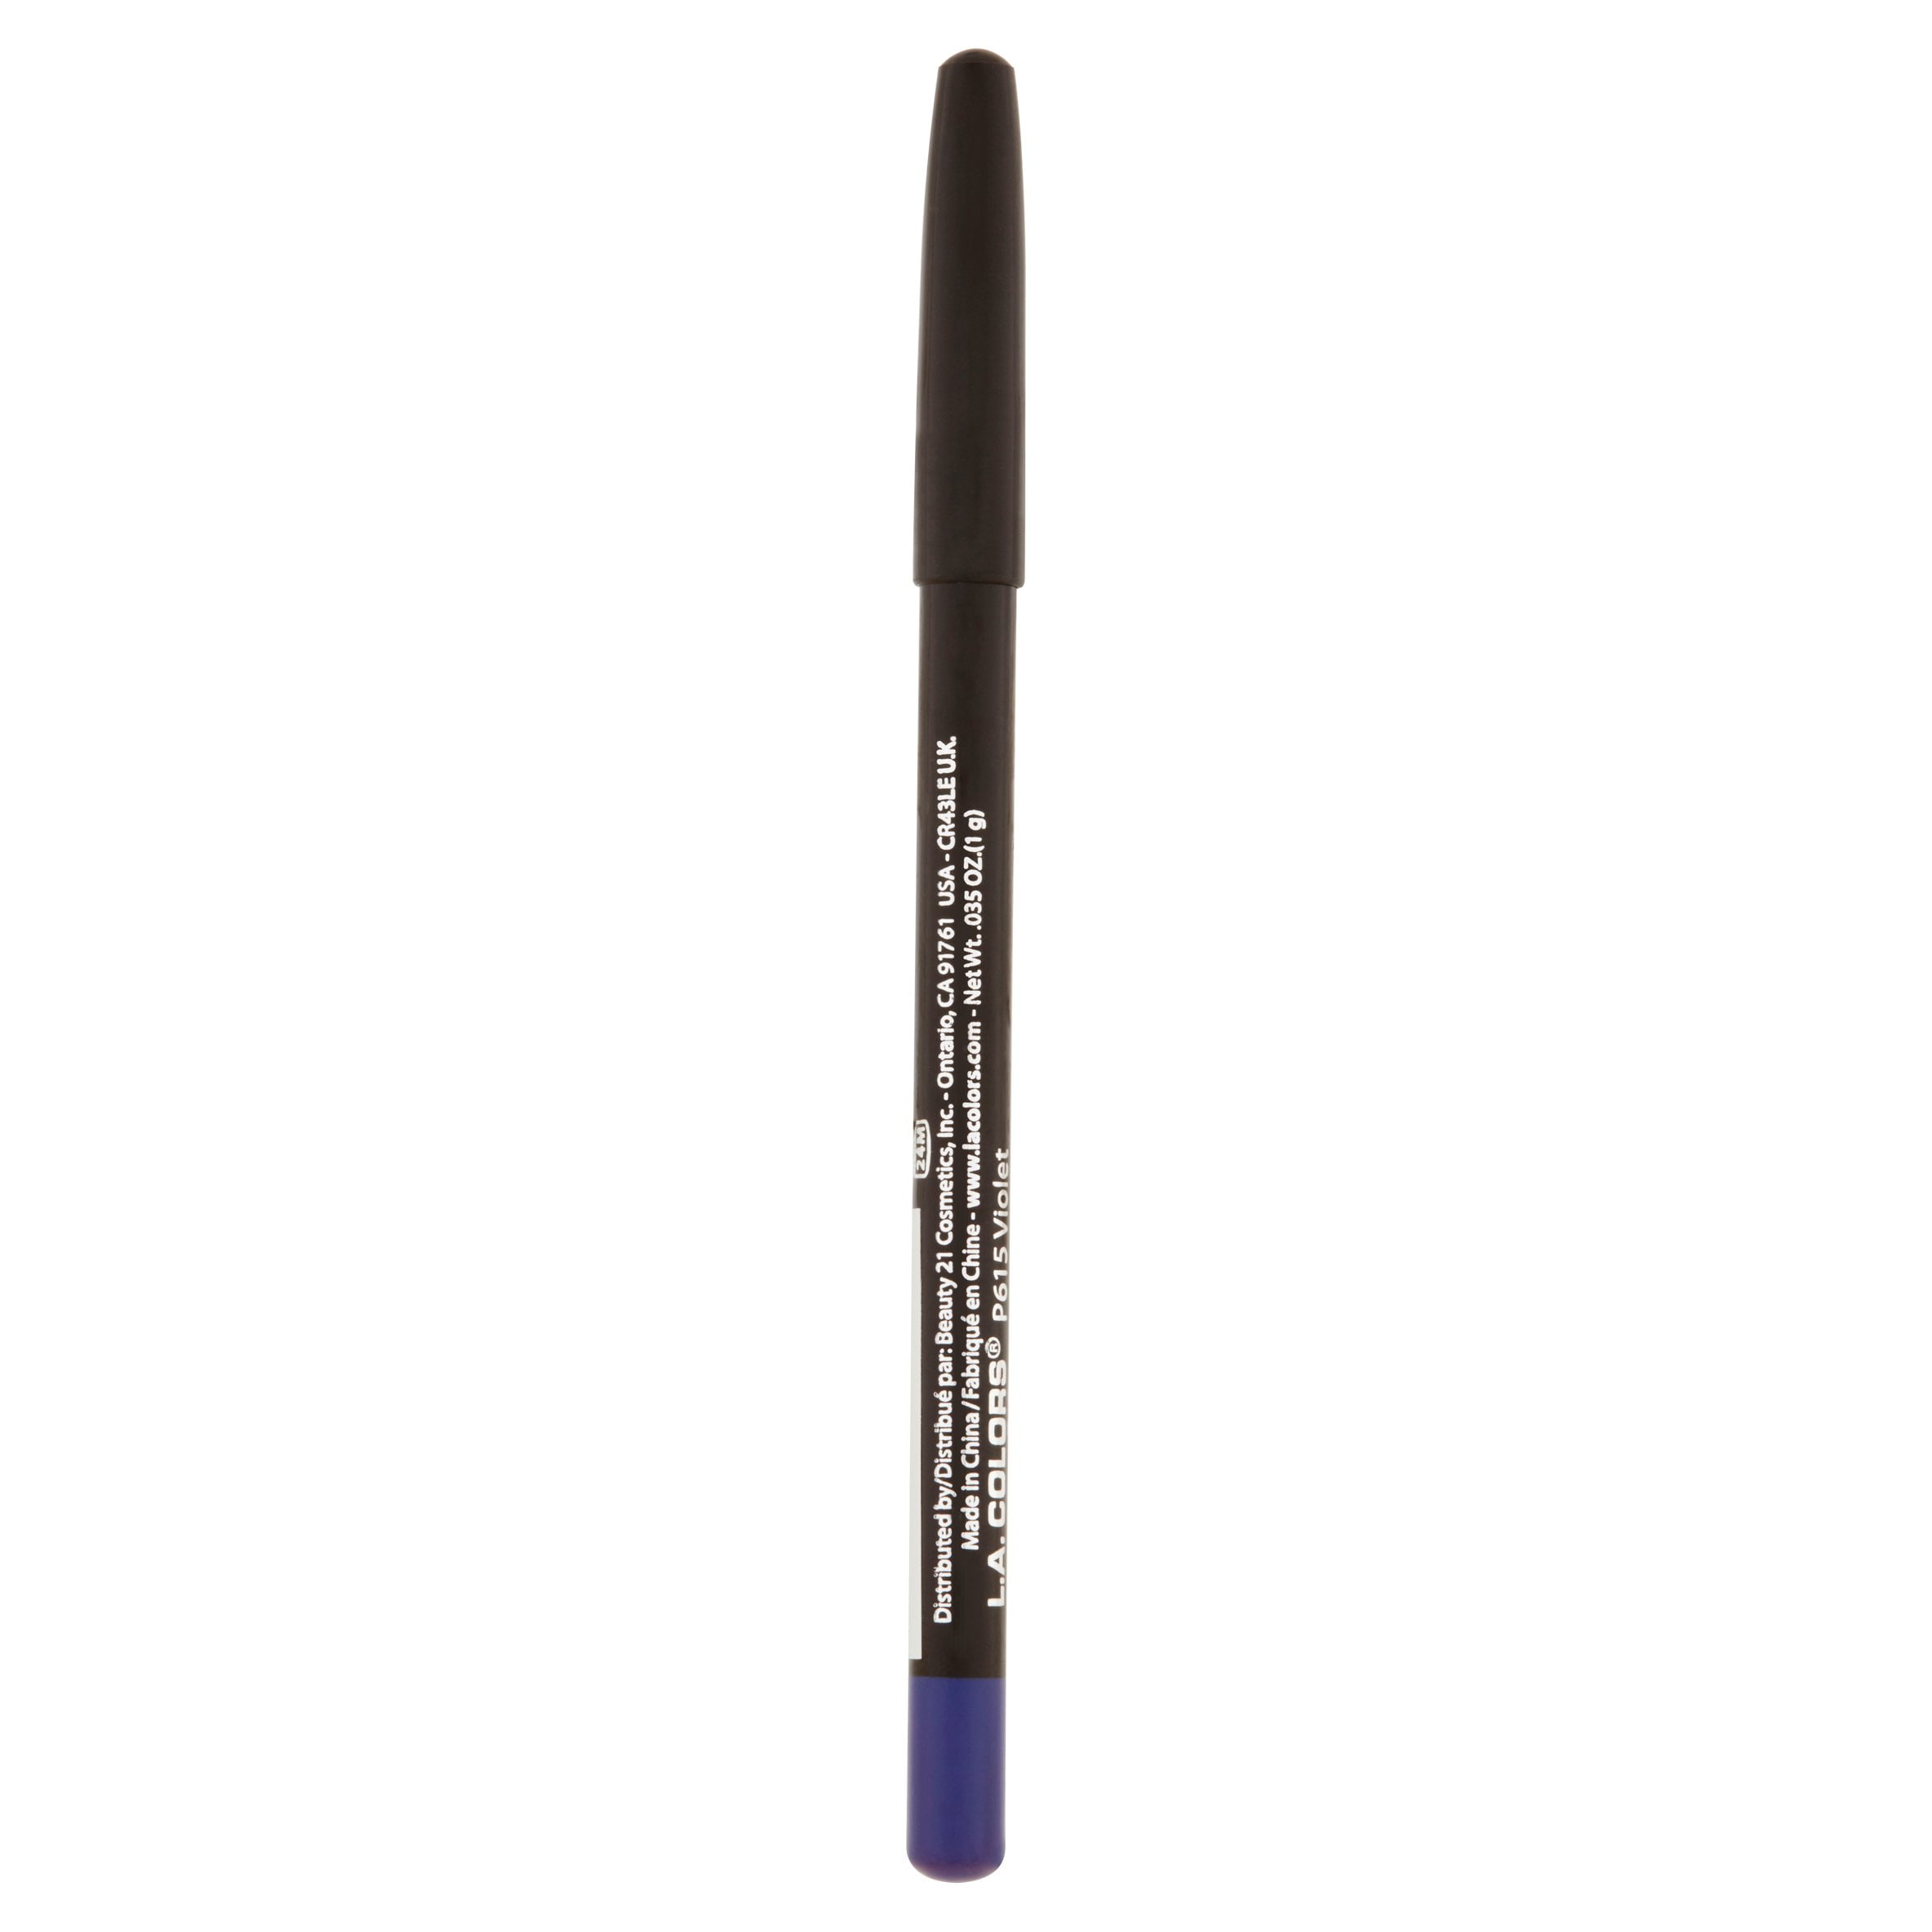 L.A. COLORS Eyeliner Pencil, Navy, 0.035 fl oz